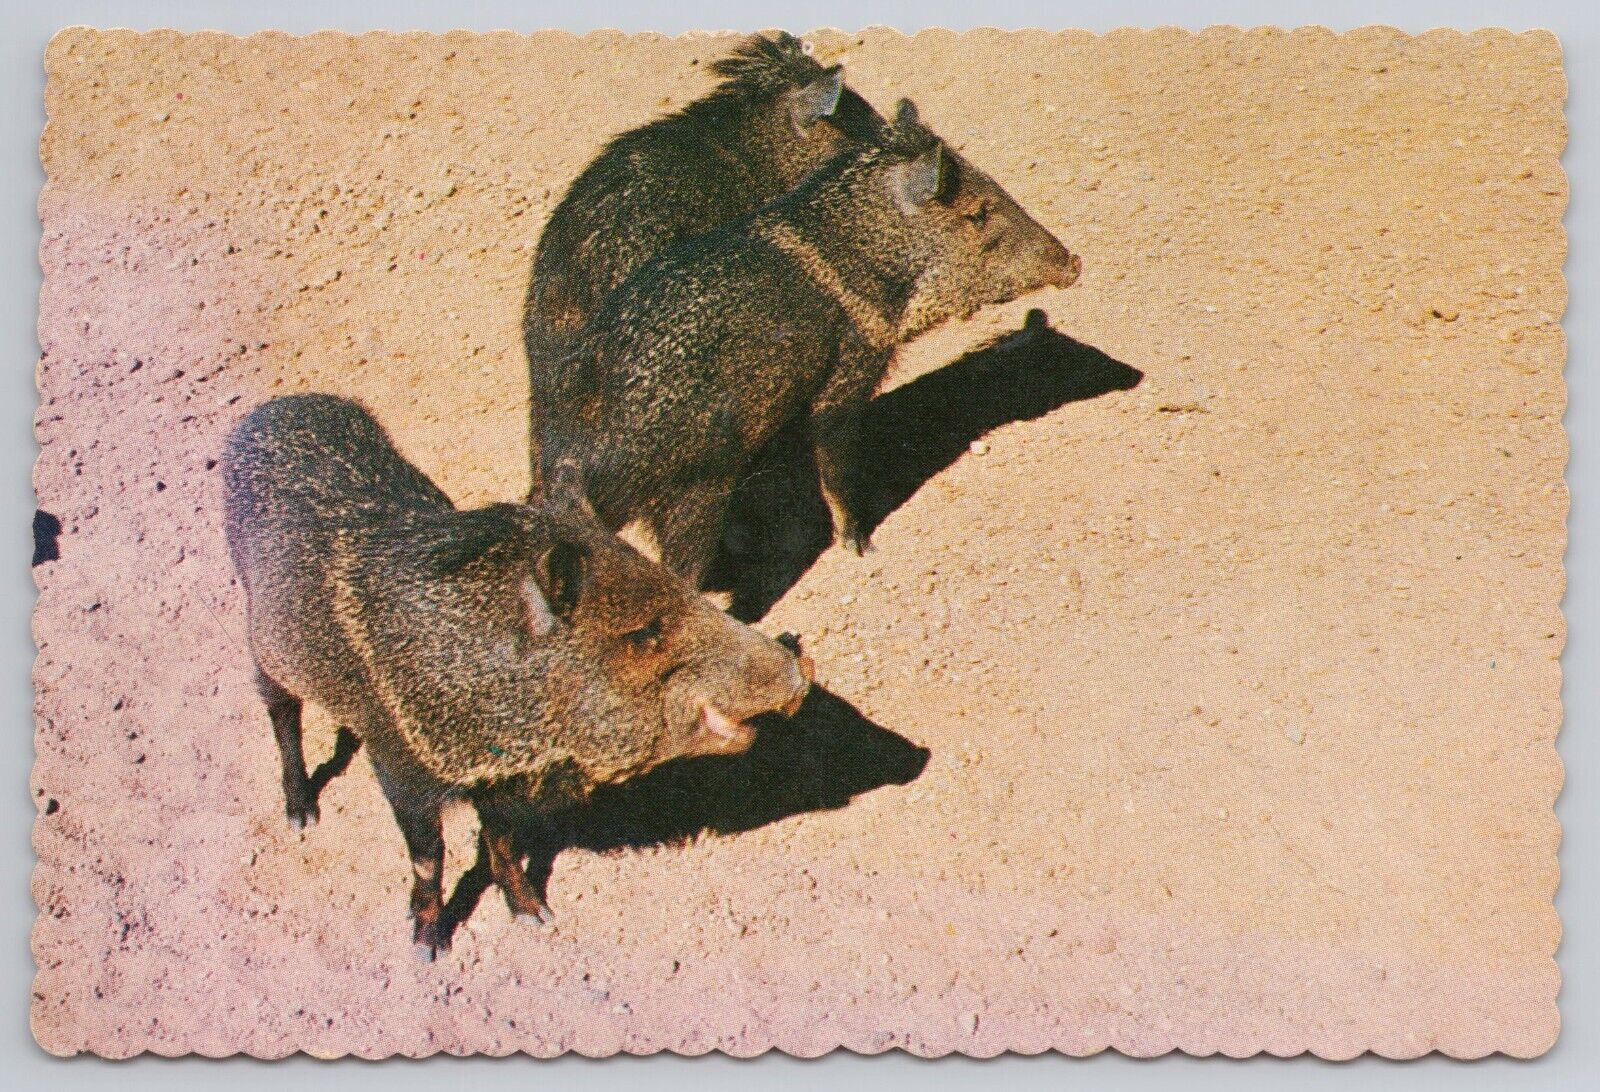 Postcard Group of Javelina (Wild Pig)